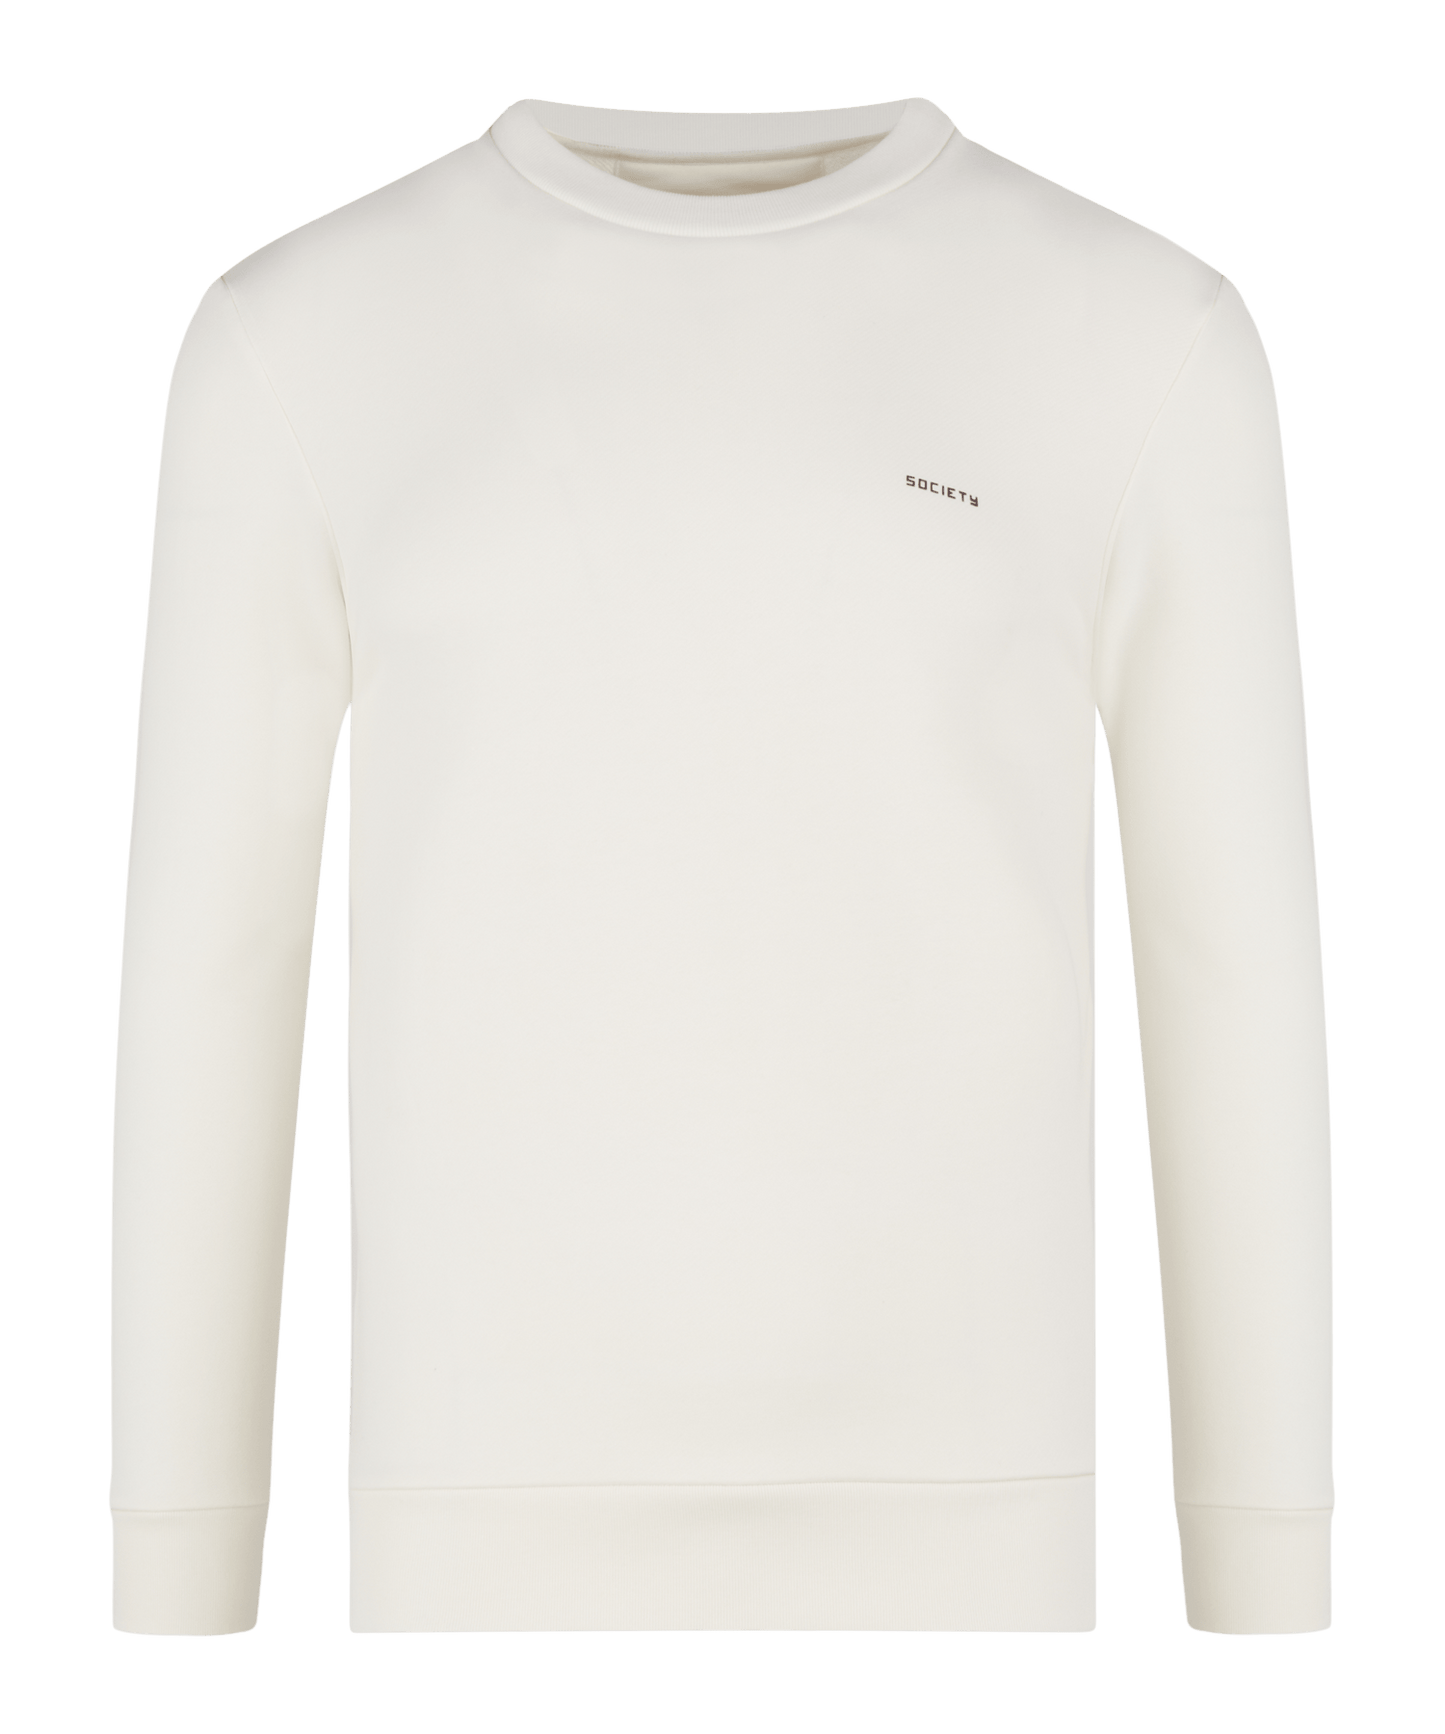 SOCI3TY sweater wit katoen